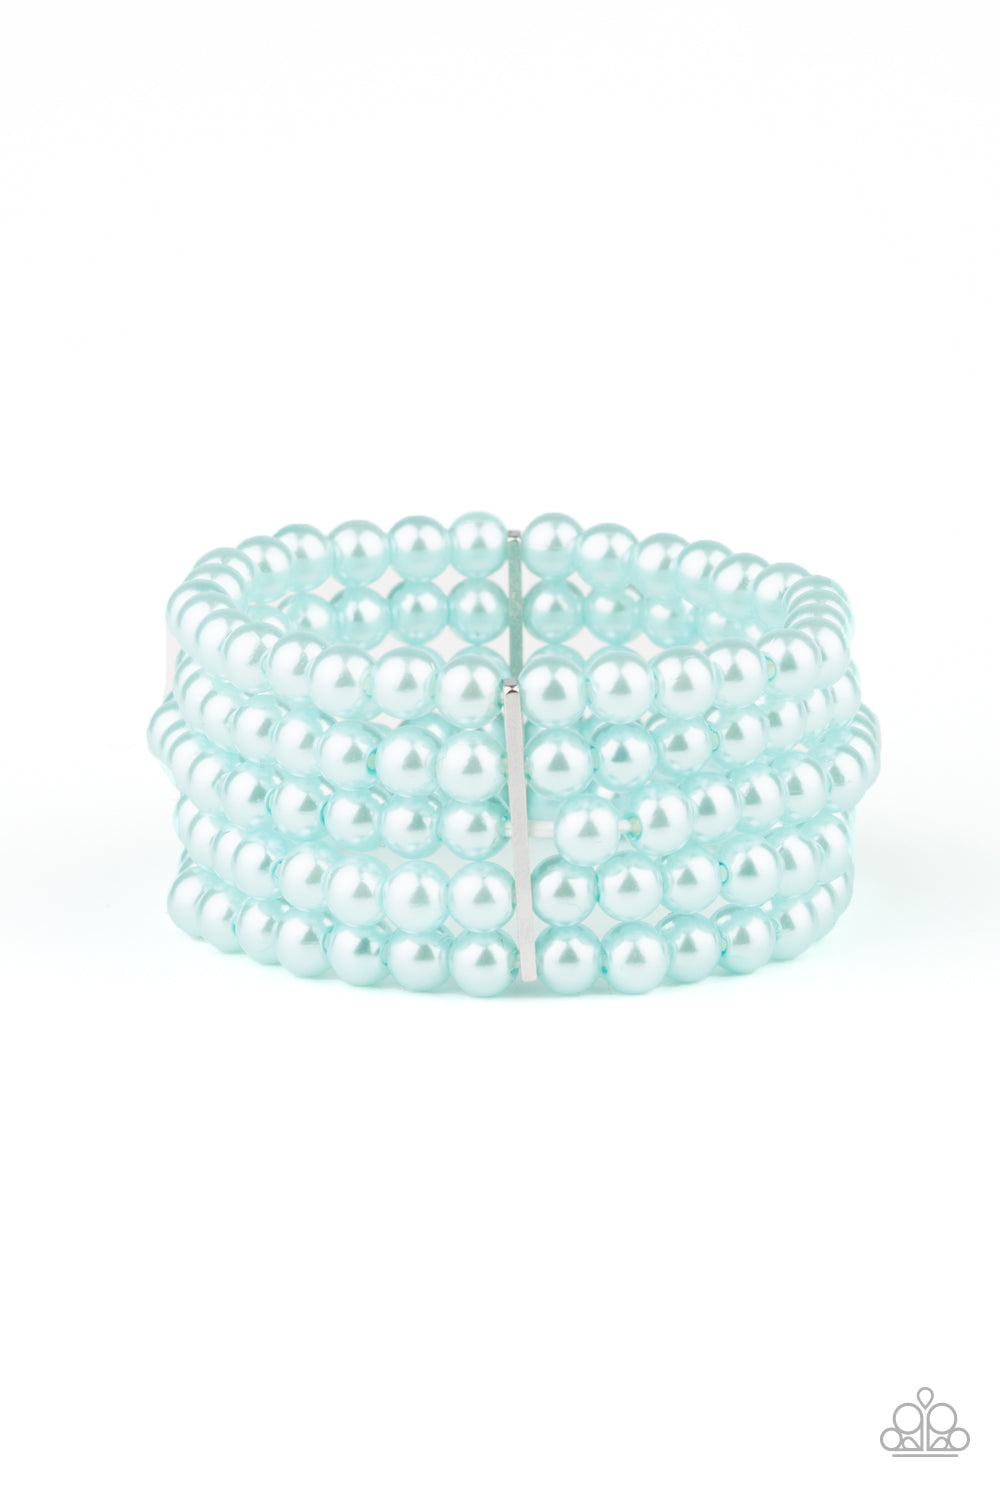 Pearl Bliss - Blue bracelet